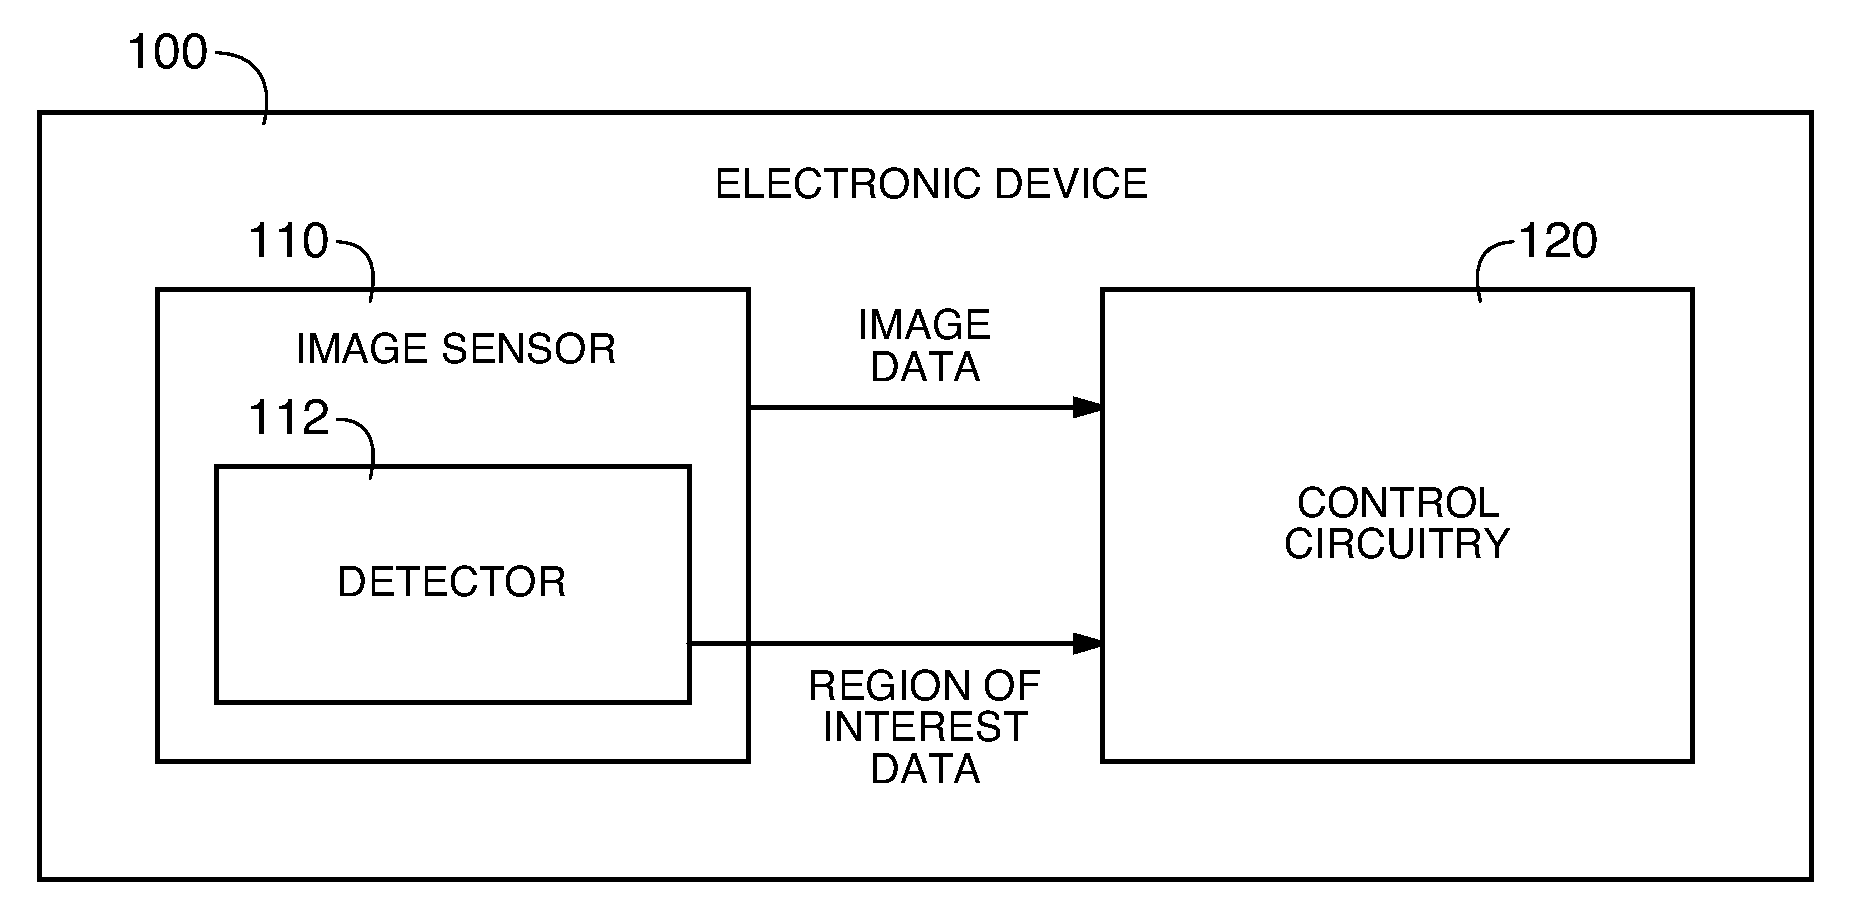 Use of z-order data in an image sensor